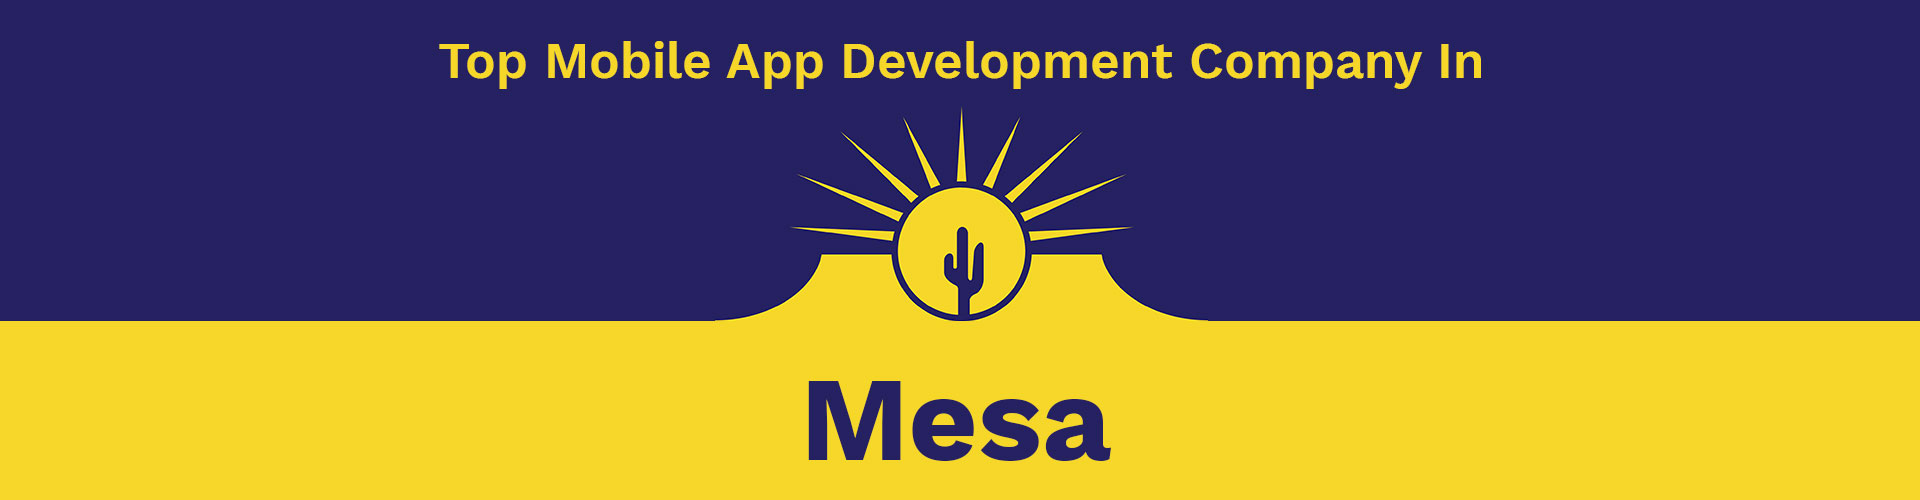 mobile app development company mesa